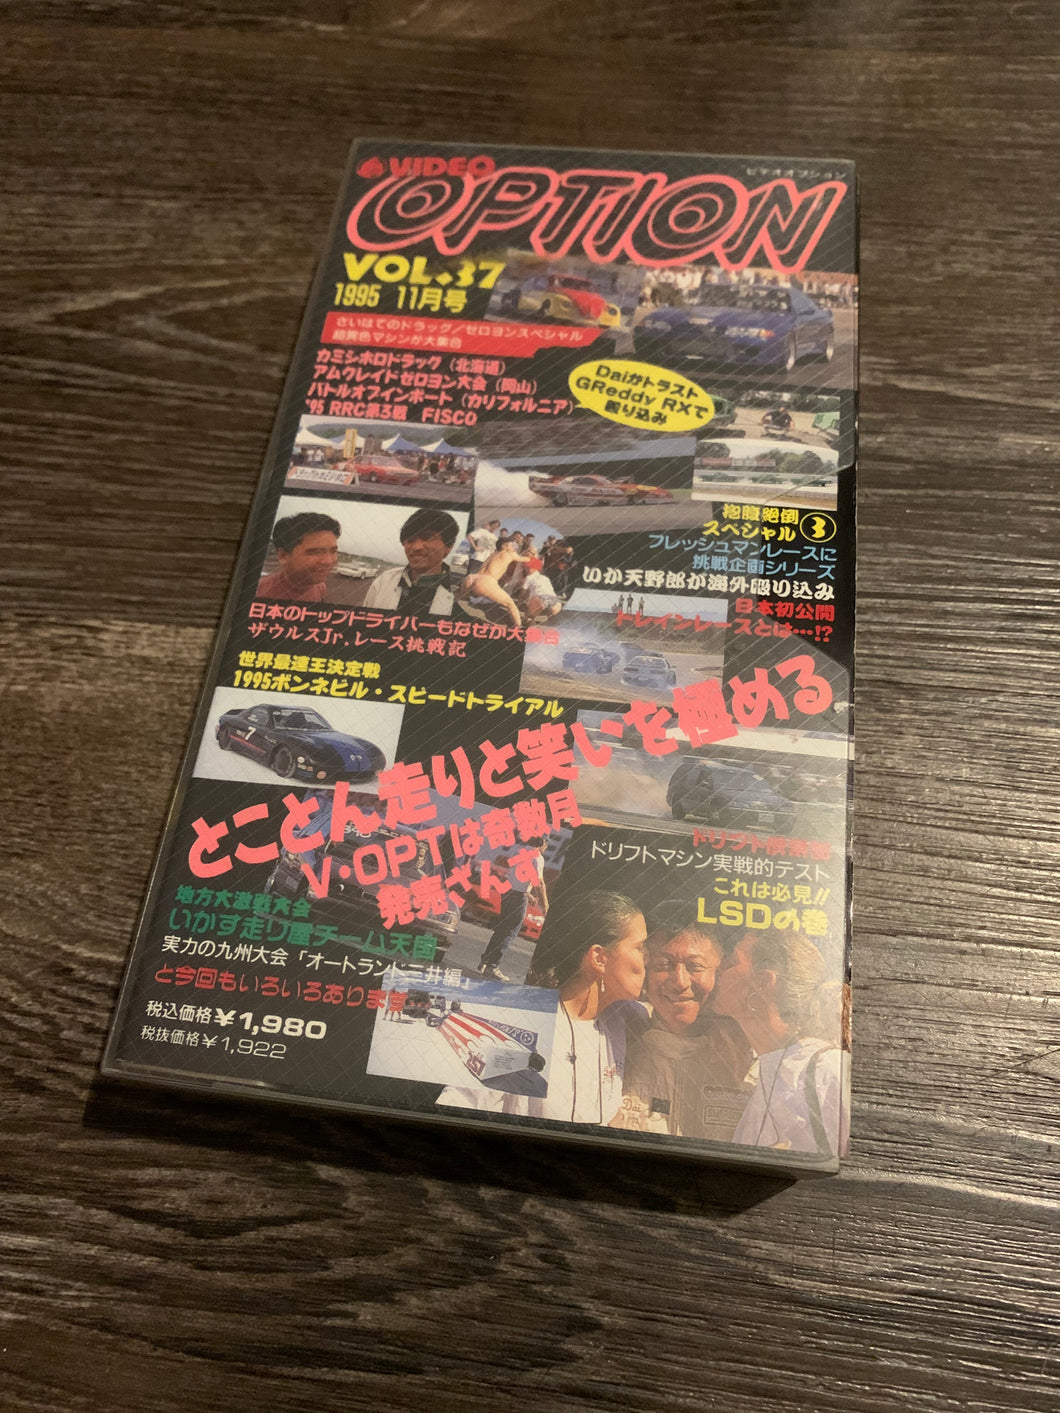 Option VHS Nov. 1995 Volume 37